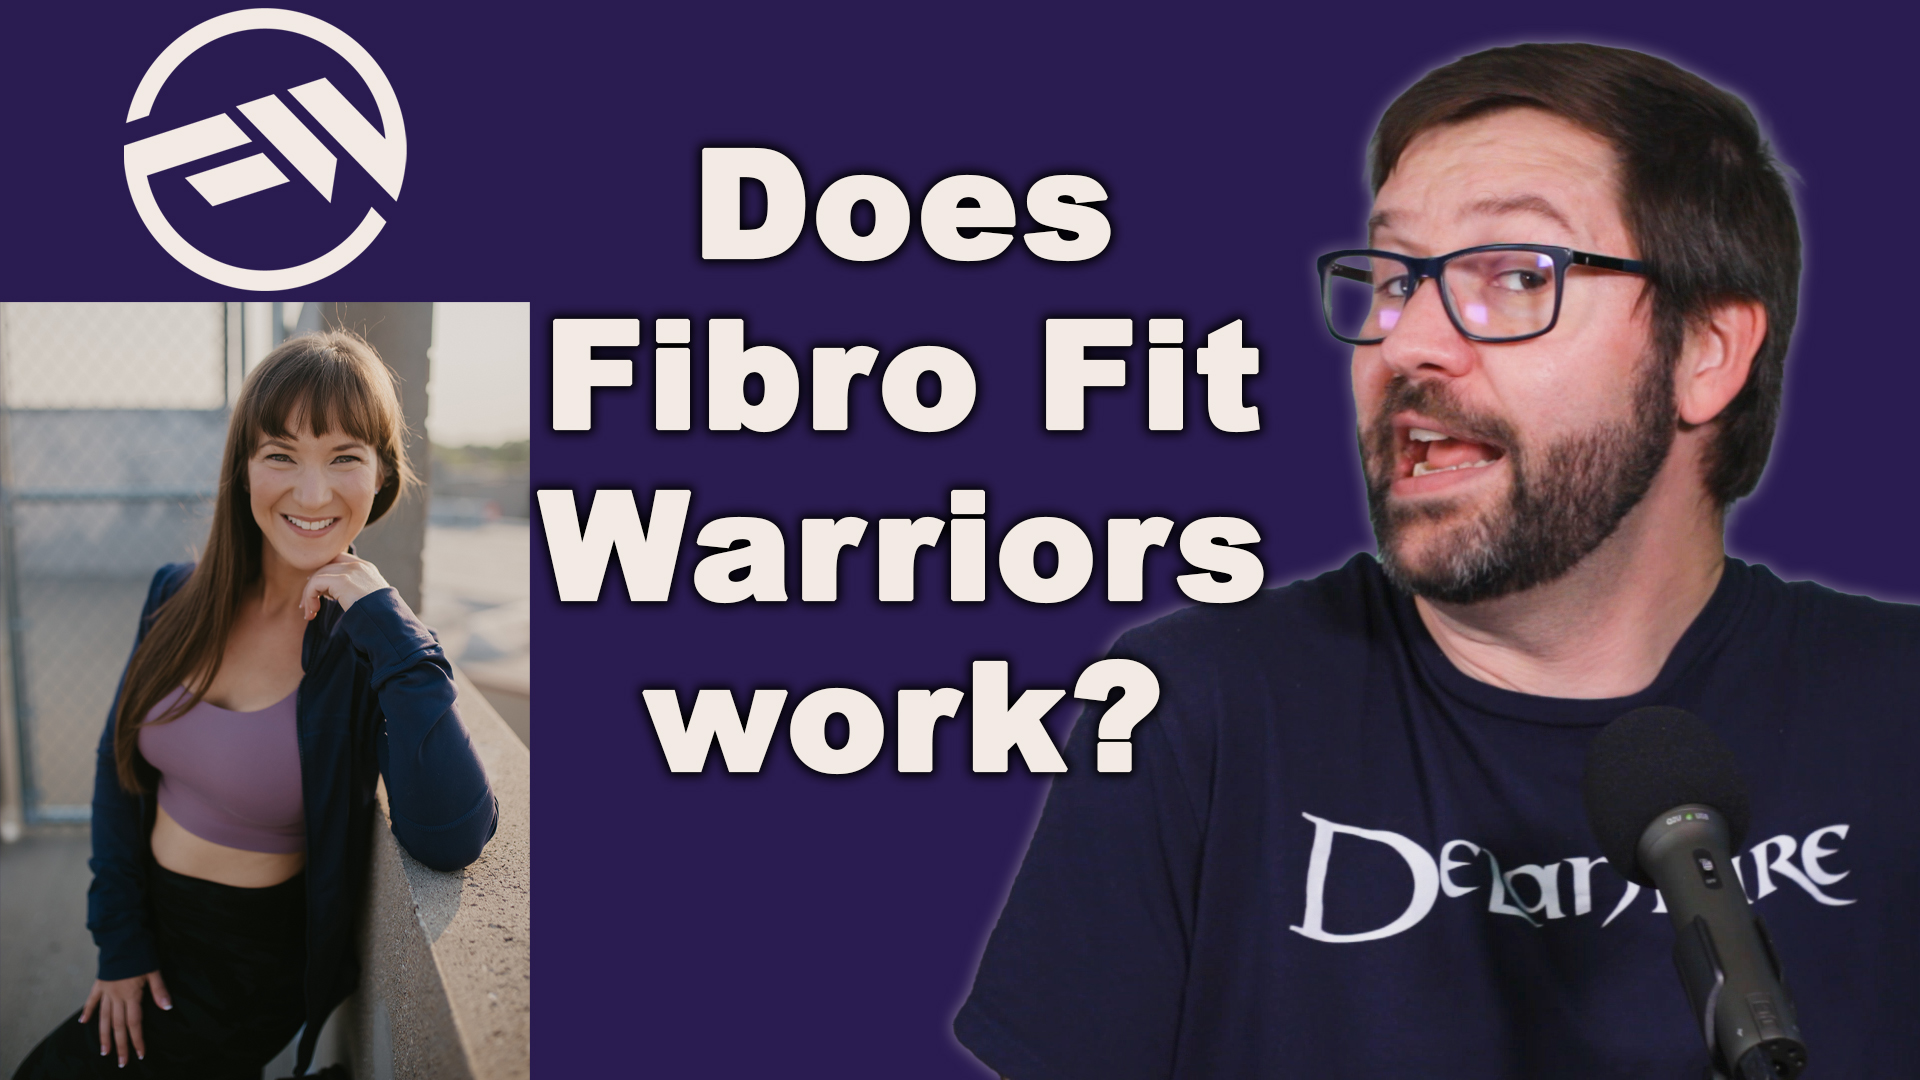 Fibro Fit Warriors fibromyalgia program review by Zack Lawrence